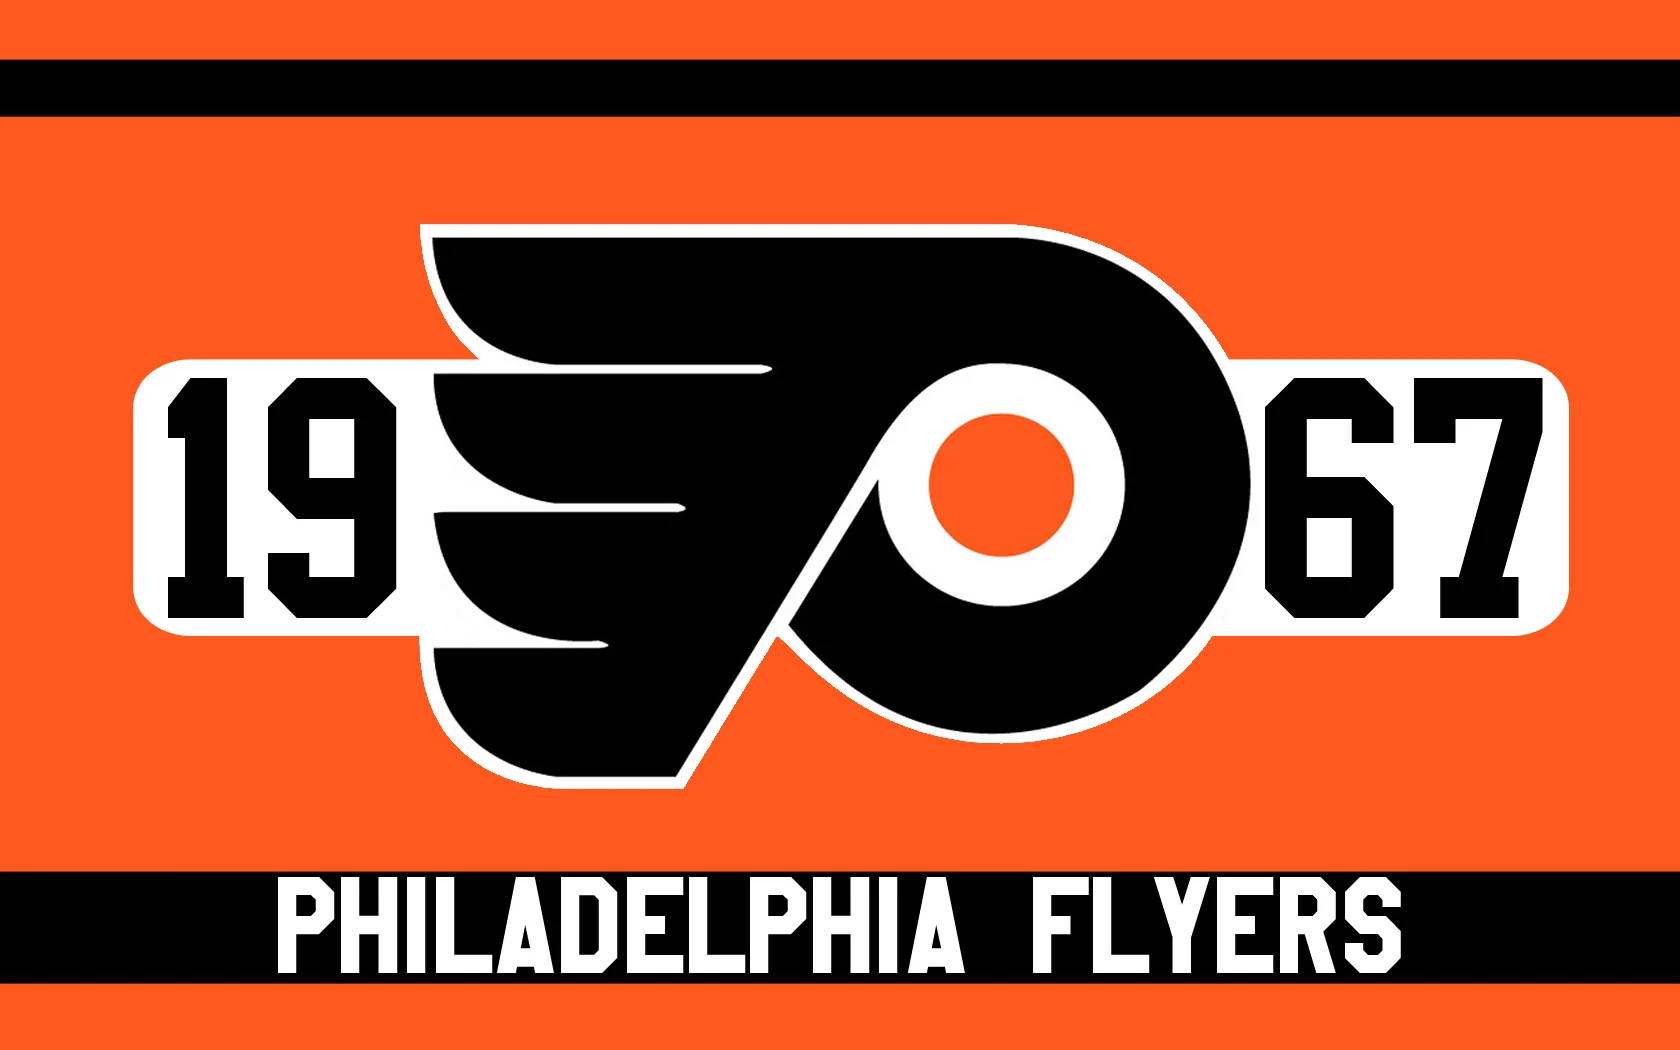 Philadelphia Flyers 1967 Logo Wallpaper